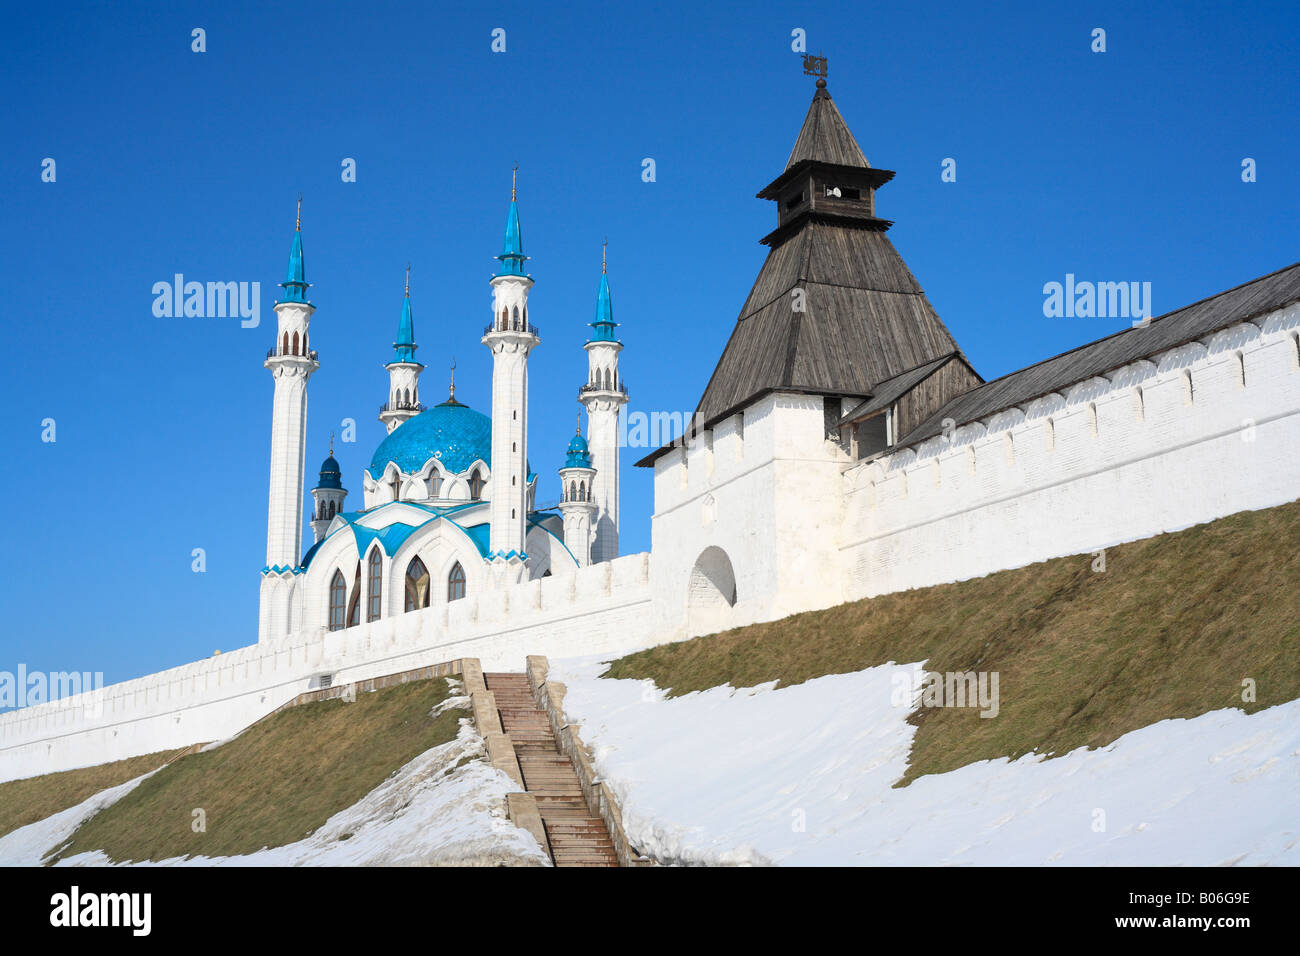 Sharif moderne mosquée dans le Kremlin de Kazan, Tatarstan, Russie Banque D'Images